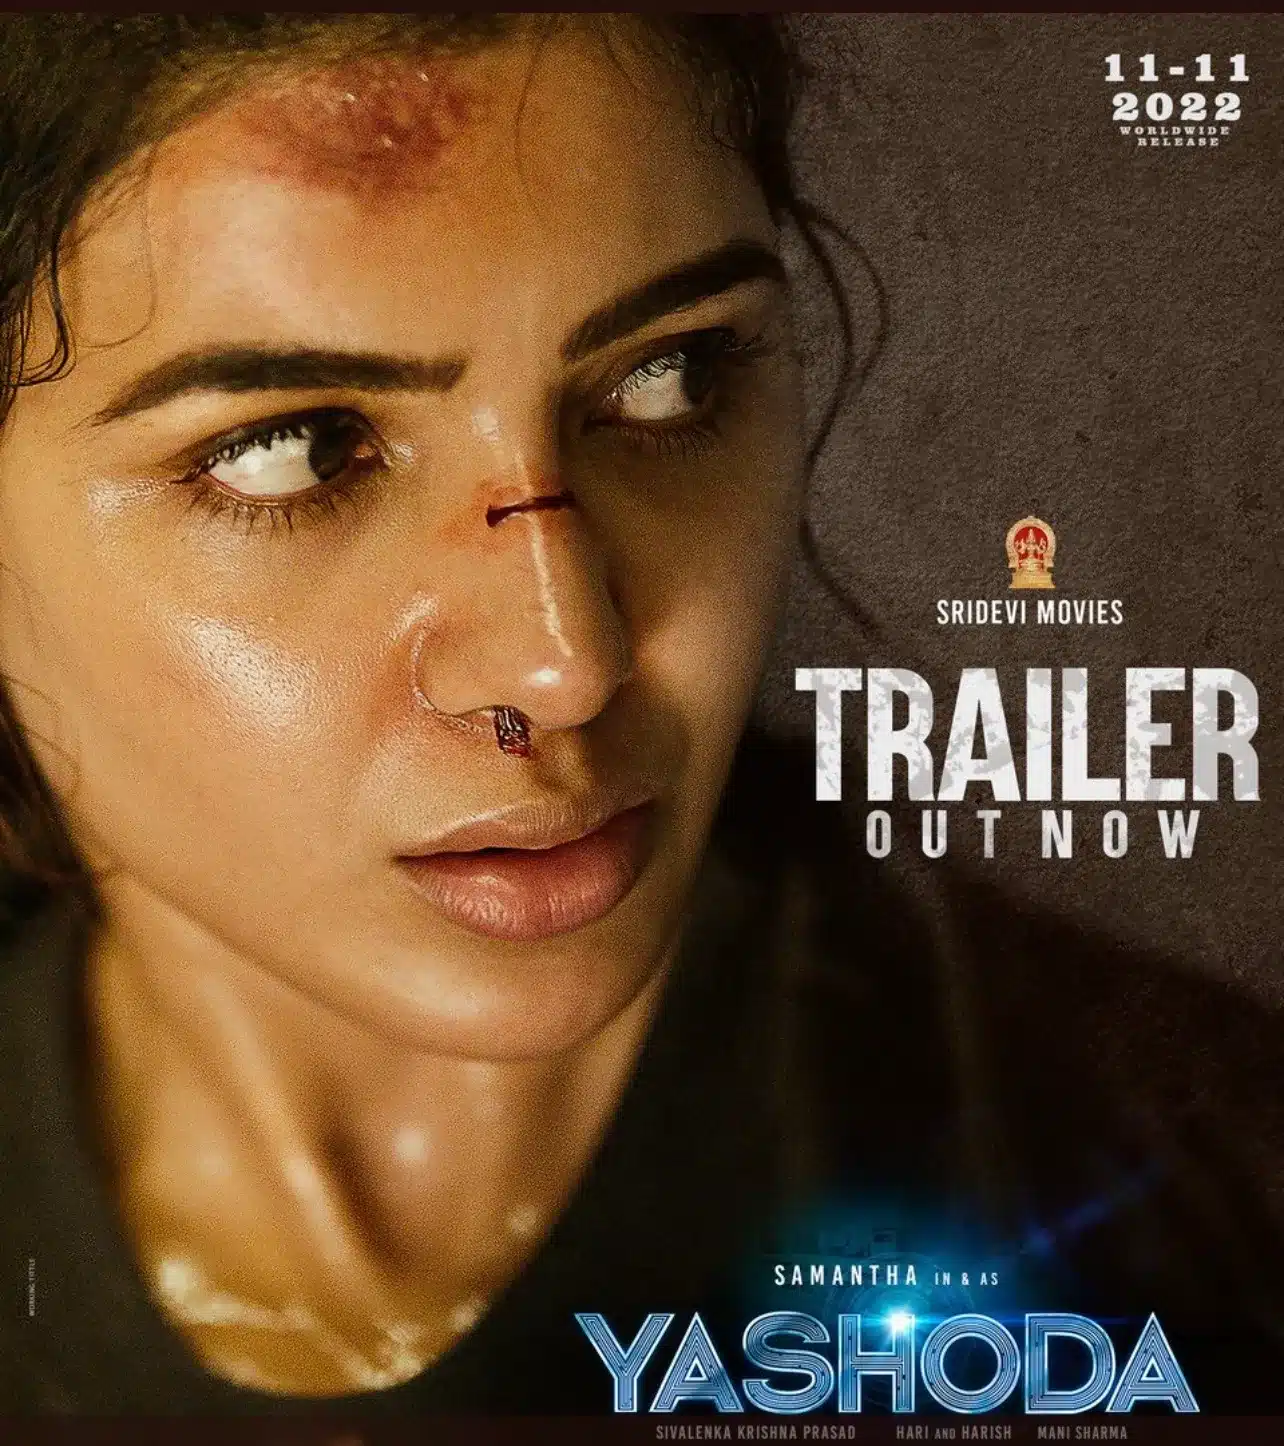 Samantha Prabhu Promoting Her Upcoming film Yashoda, Despite Her Ill Health - Asiana Times